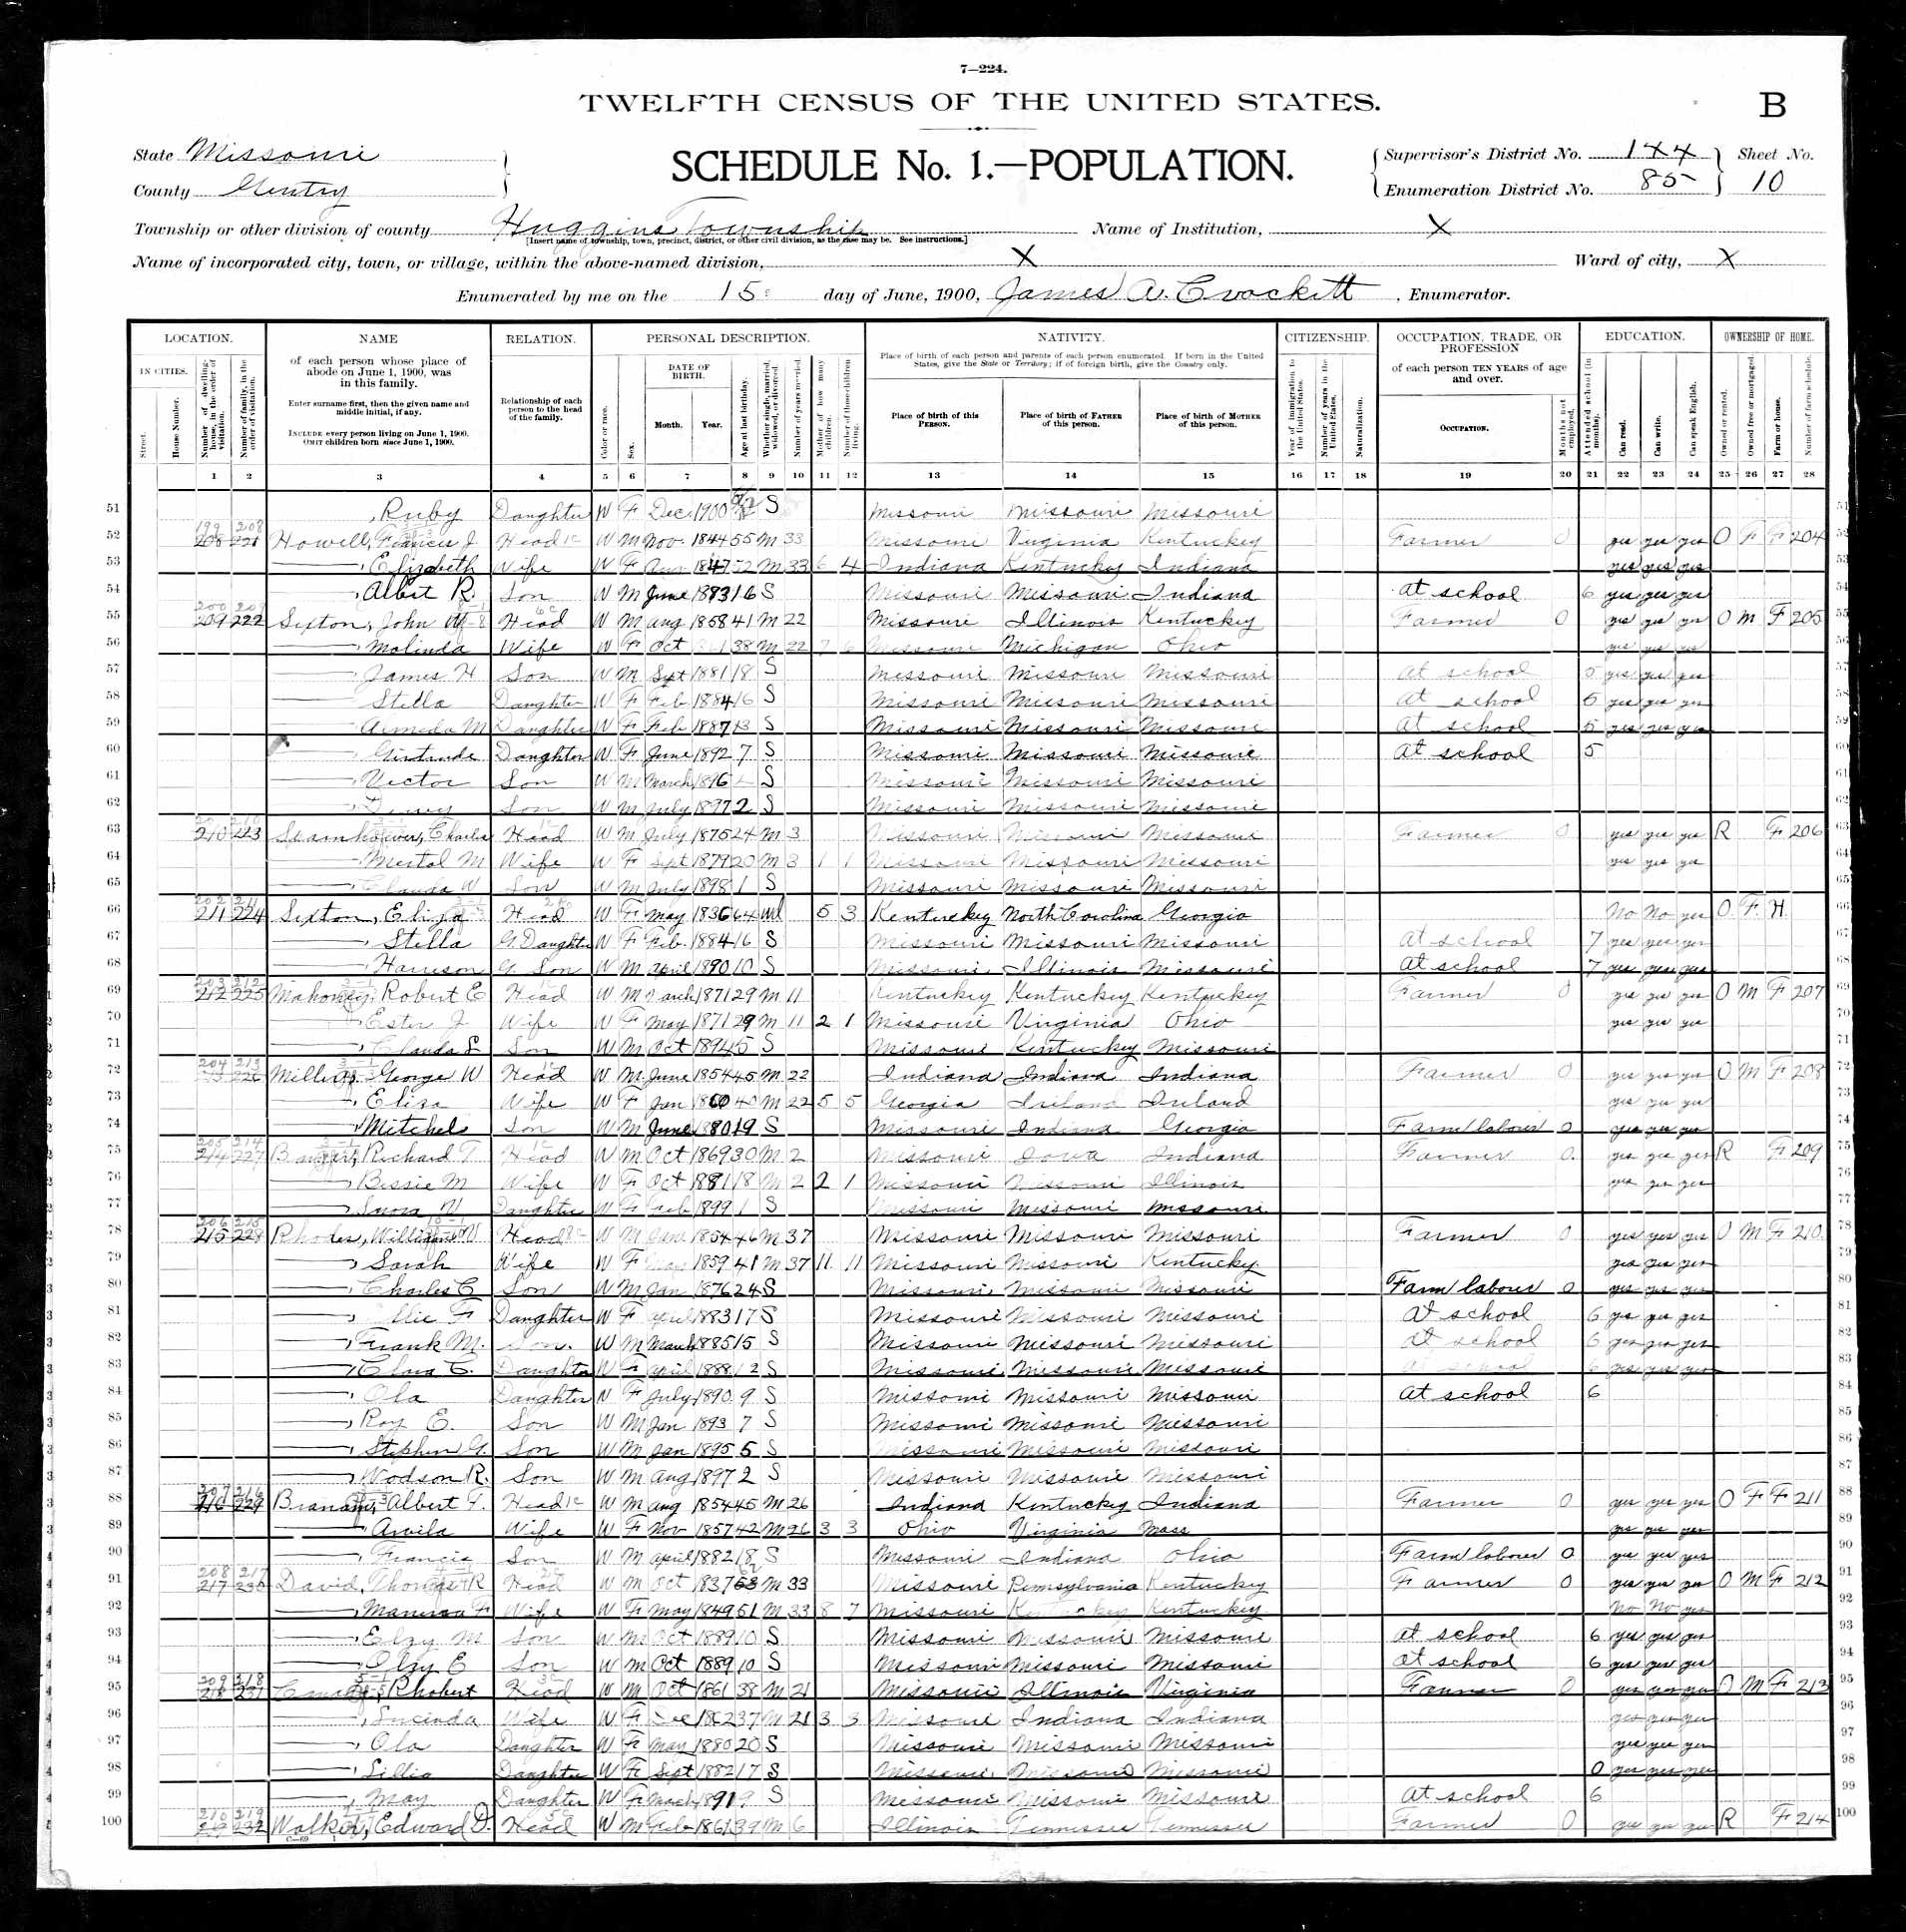 Edward W. Walker, 1900 Gentry County, Missouri, census